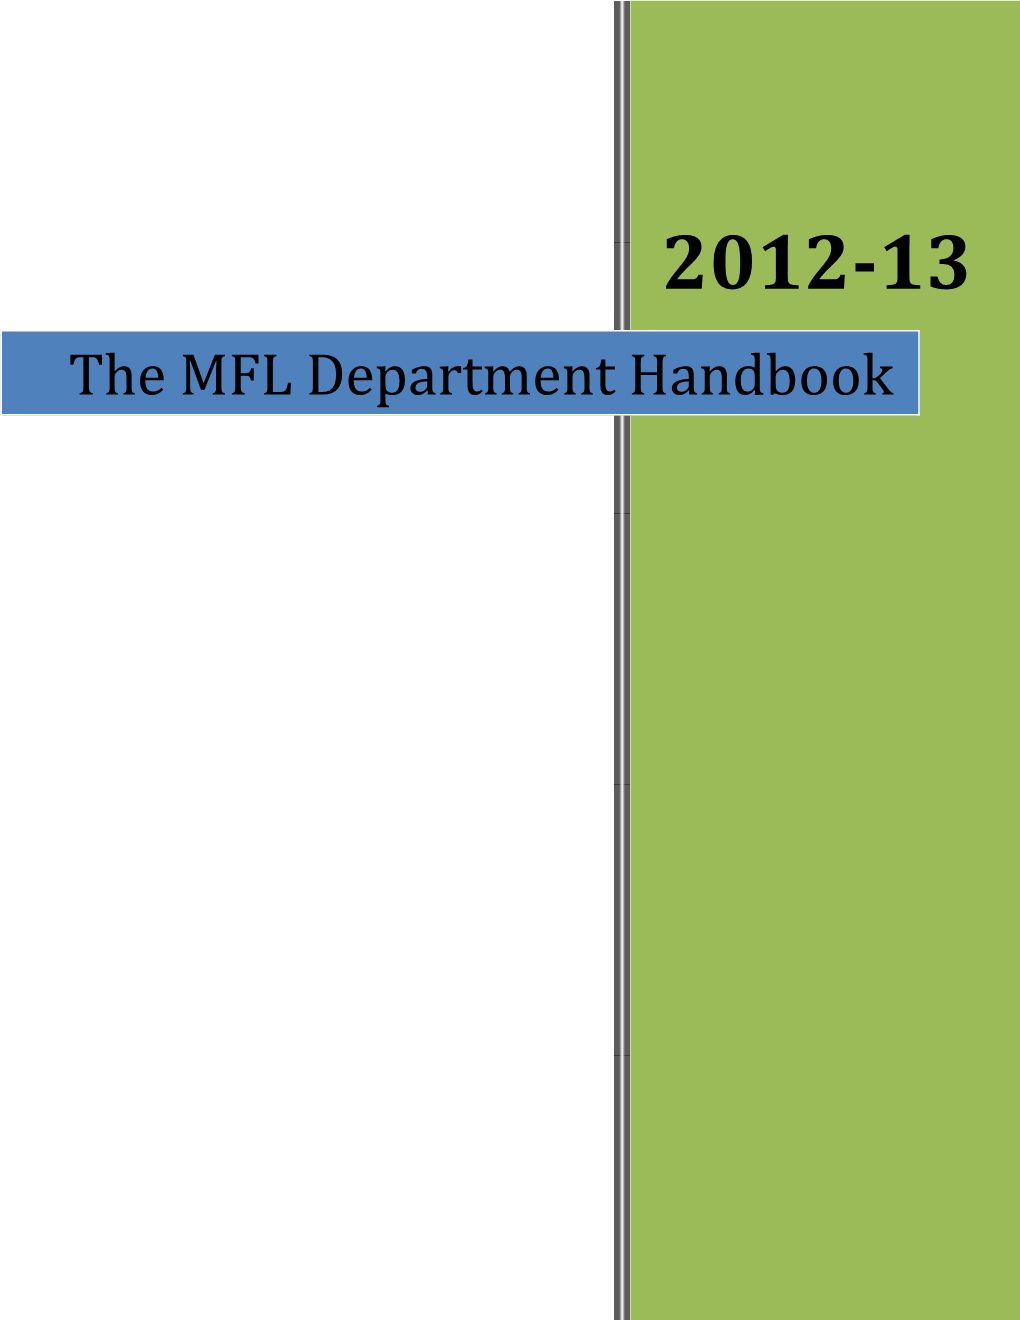 The MFL Department Handbook